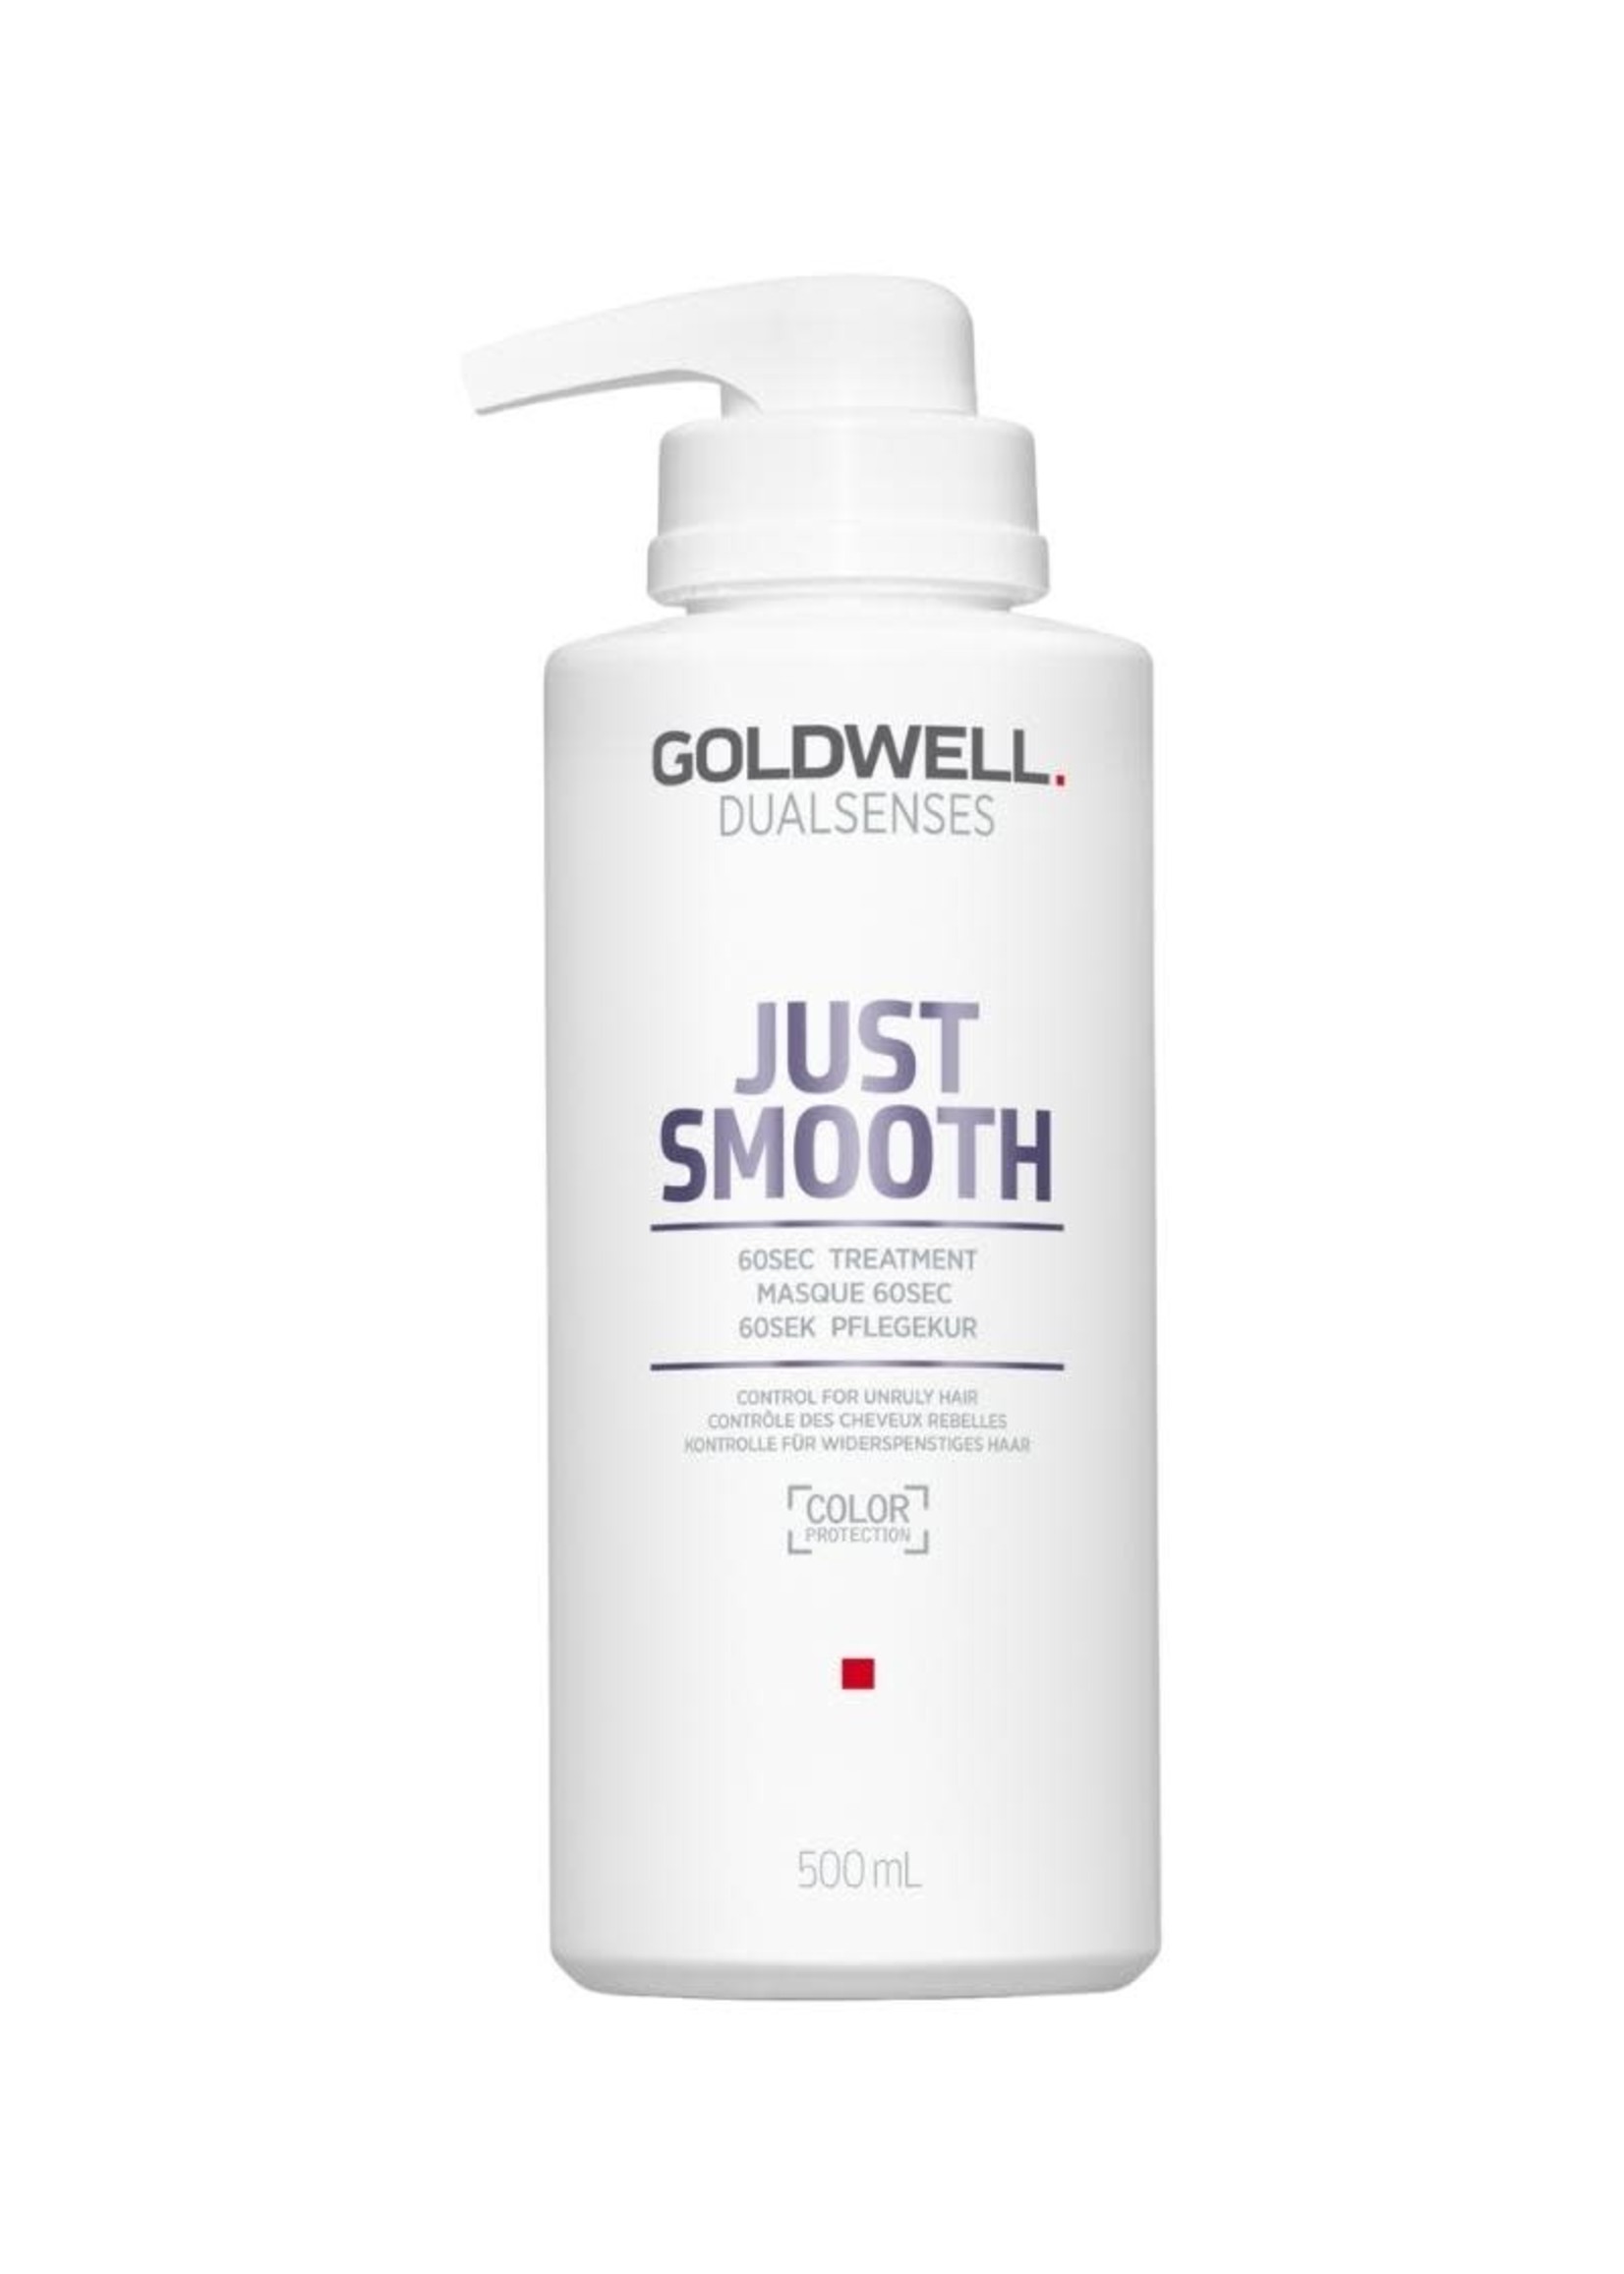 Goldwell Goldwell Dualsenses Just Smooth 60sec Treatment 500ml